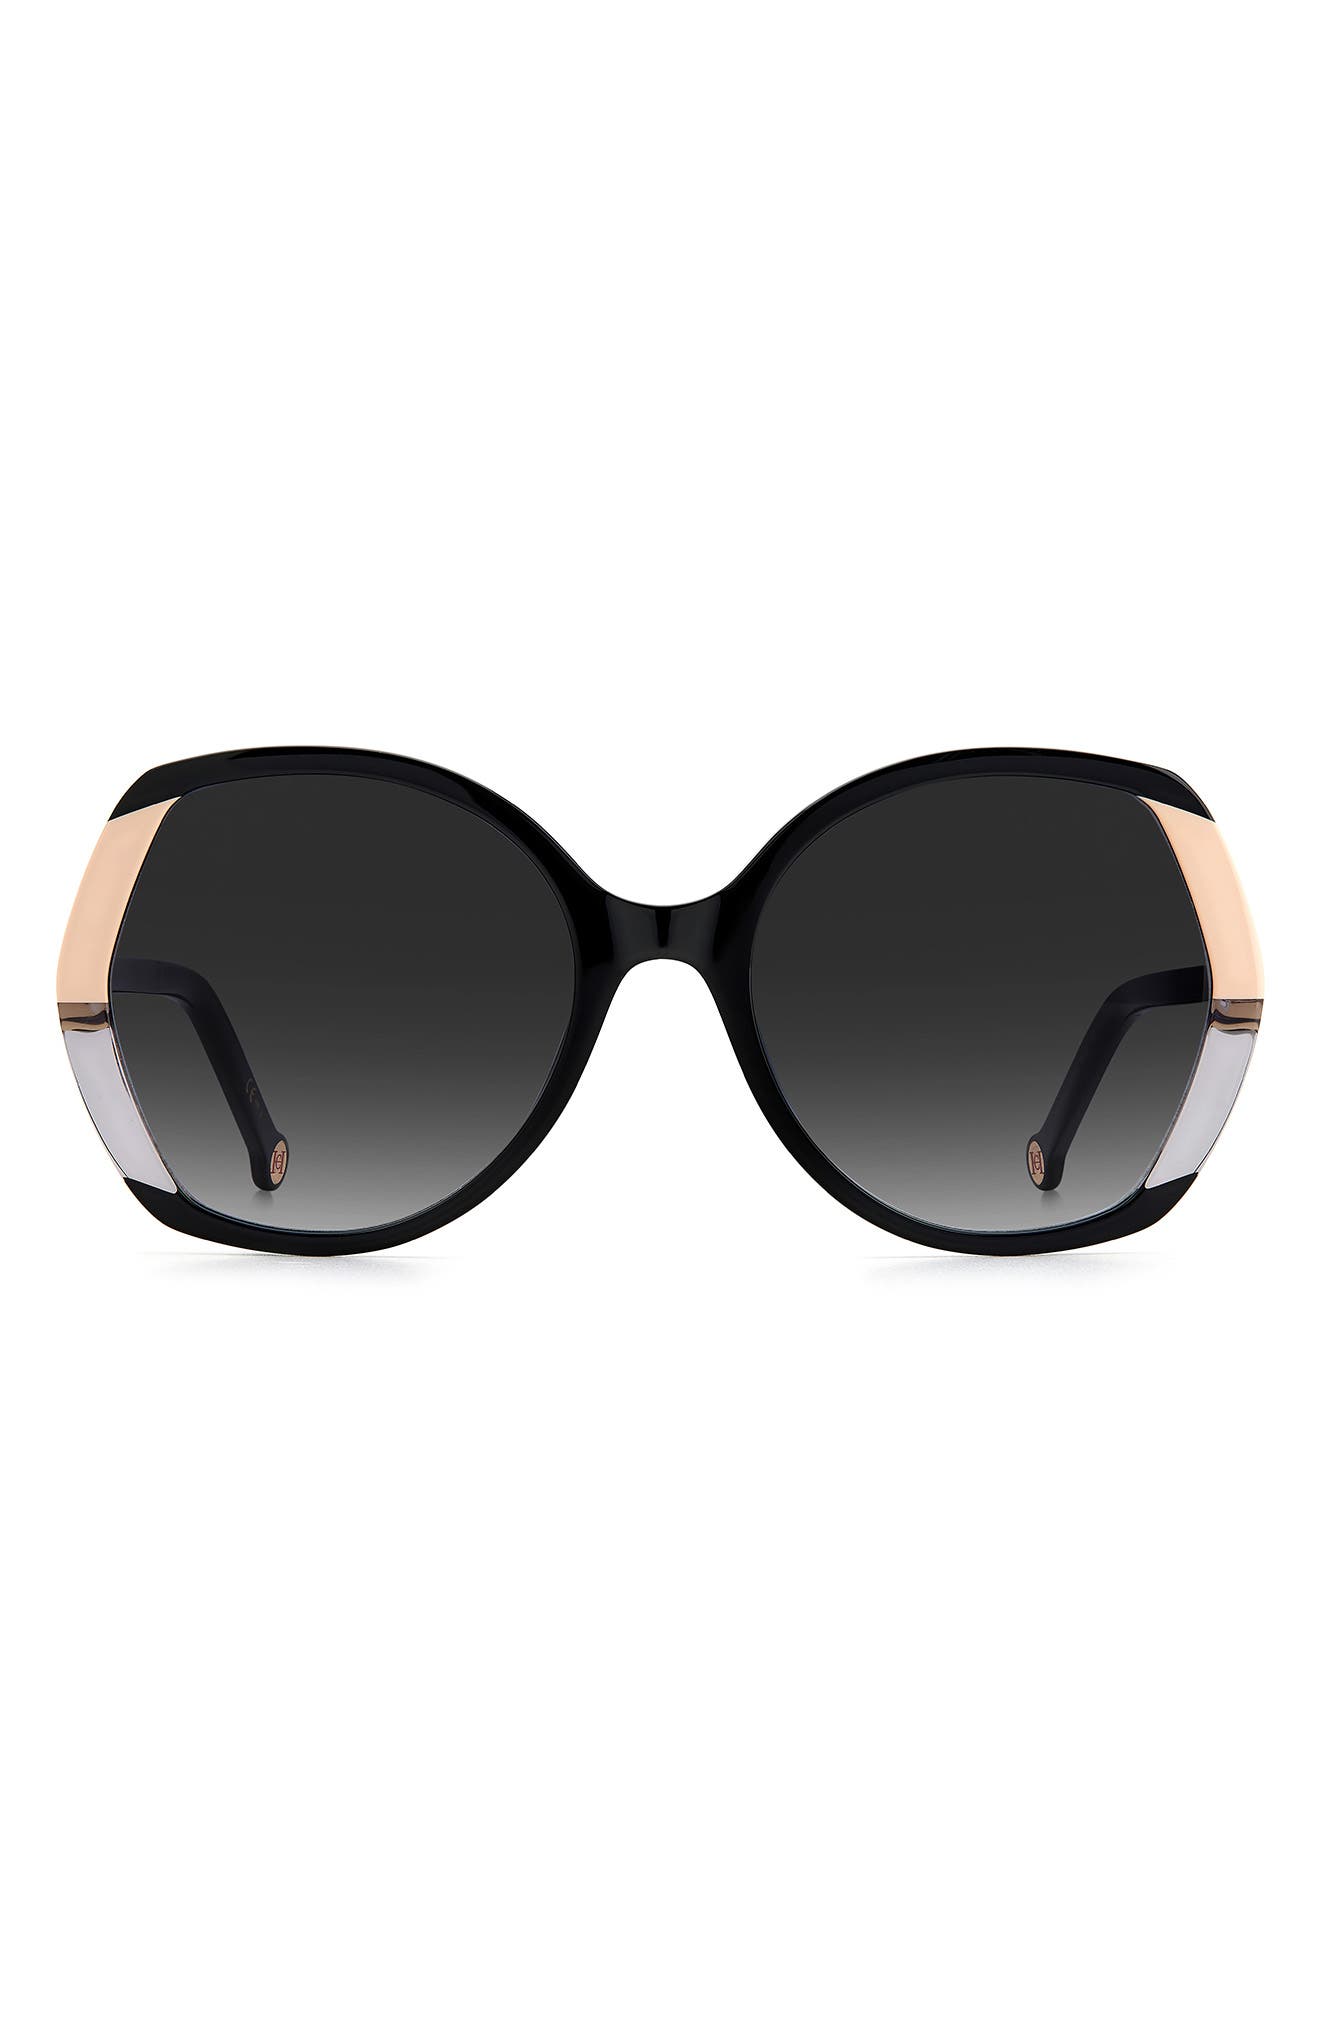 Accessories Sunglasses & Eyewear Sunglasses T-LOOK dolce vita 2 n-5 vintage sunglasses DEADSTOCK 